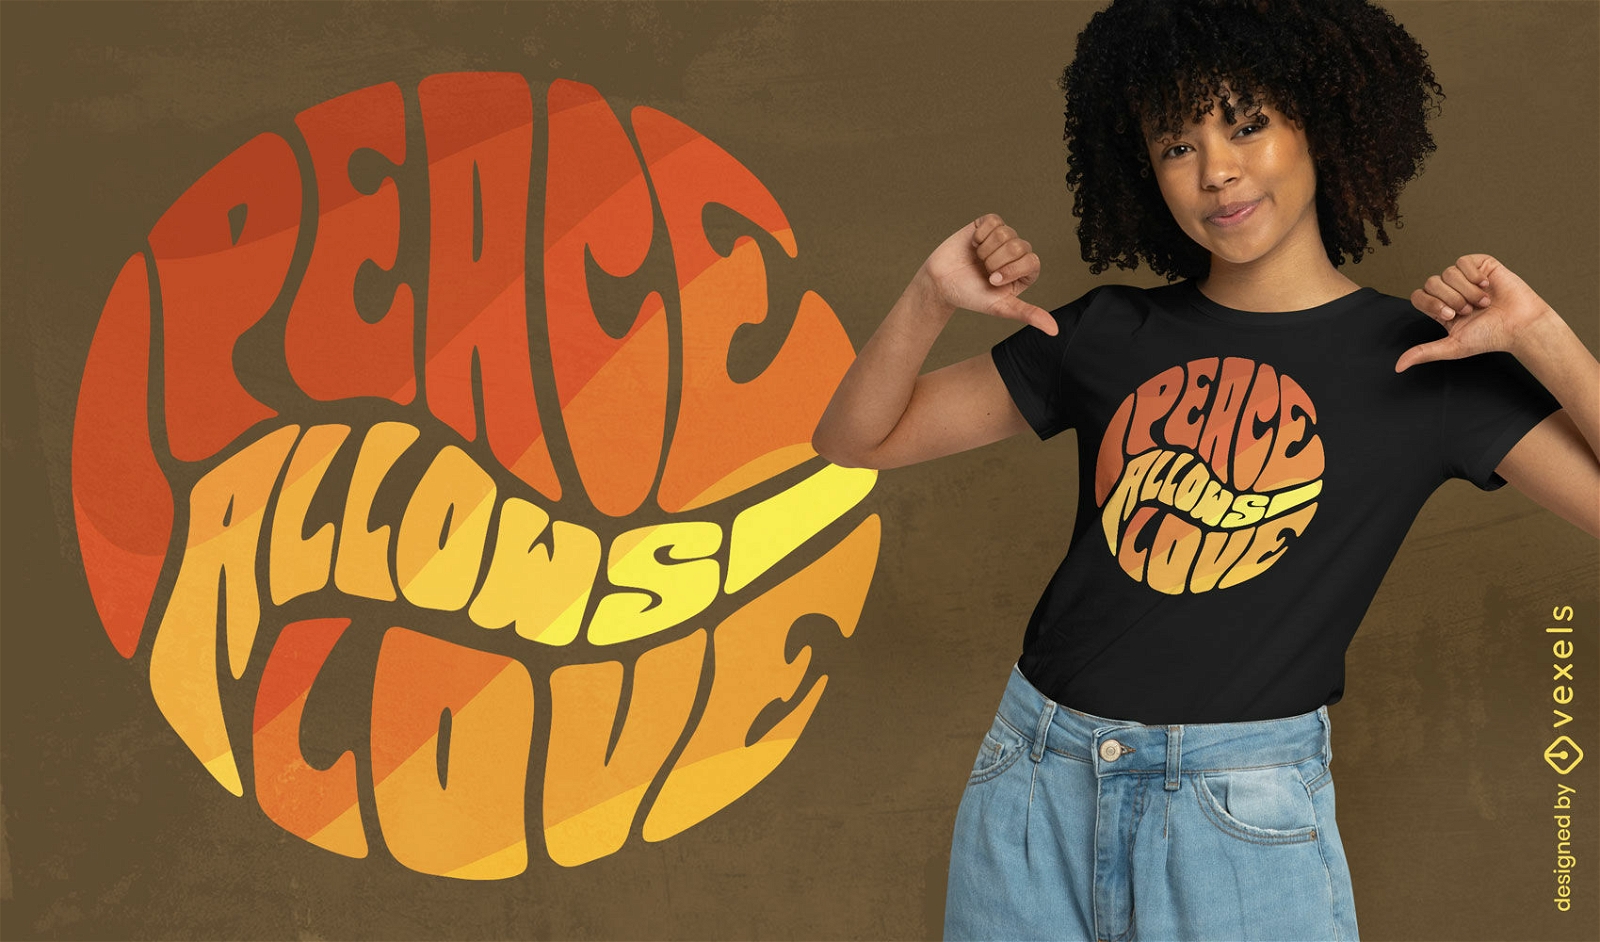 Peace allows love t-shirt design